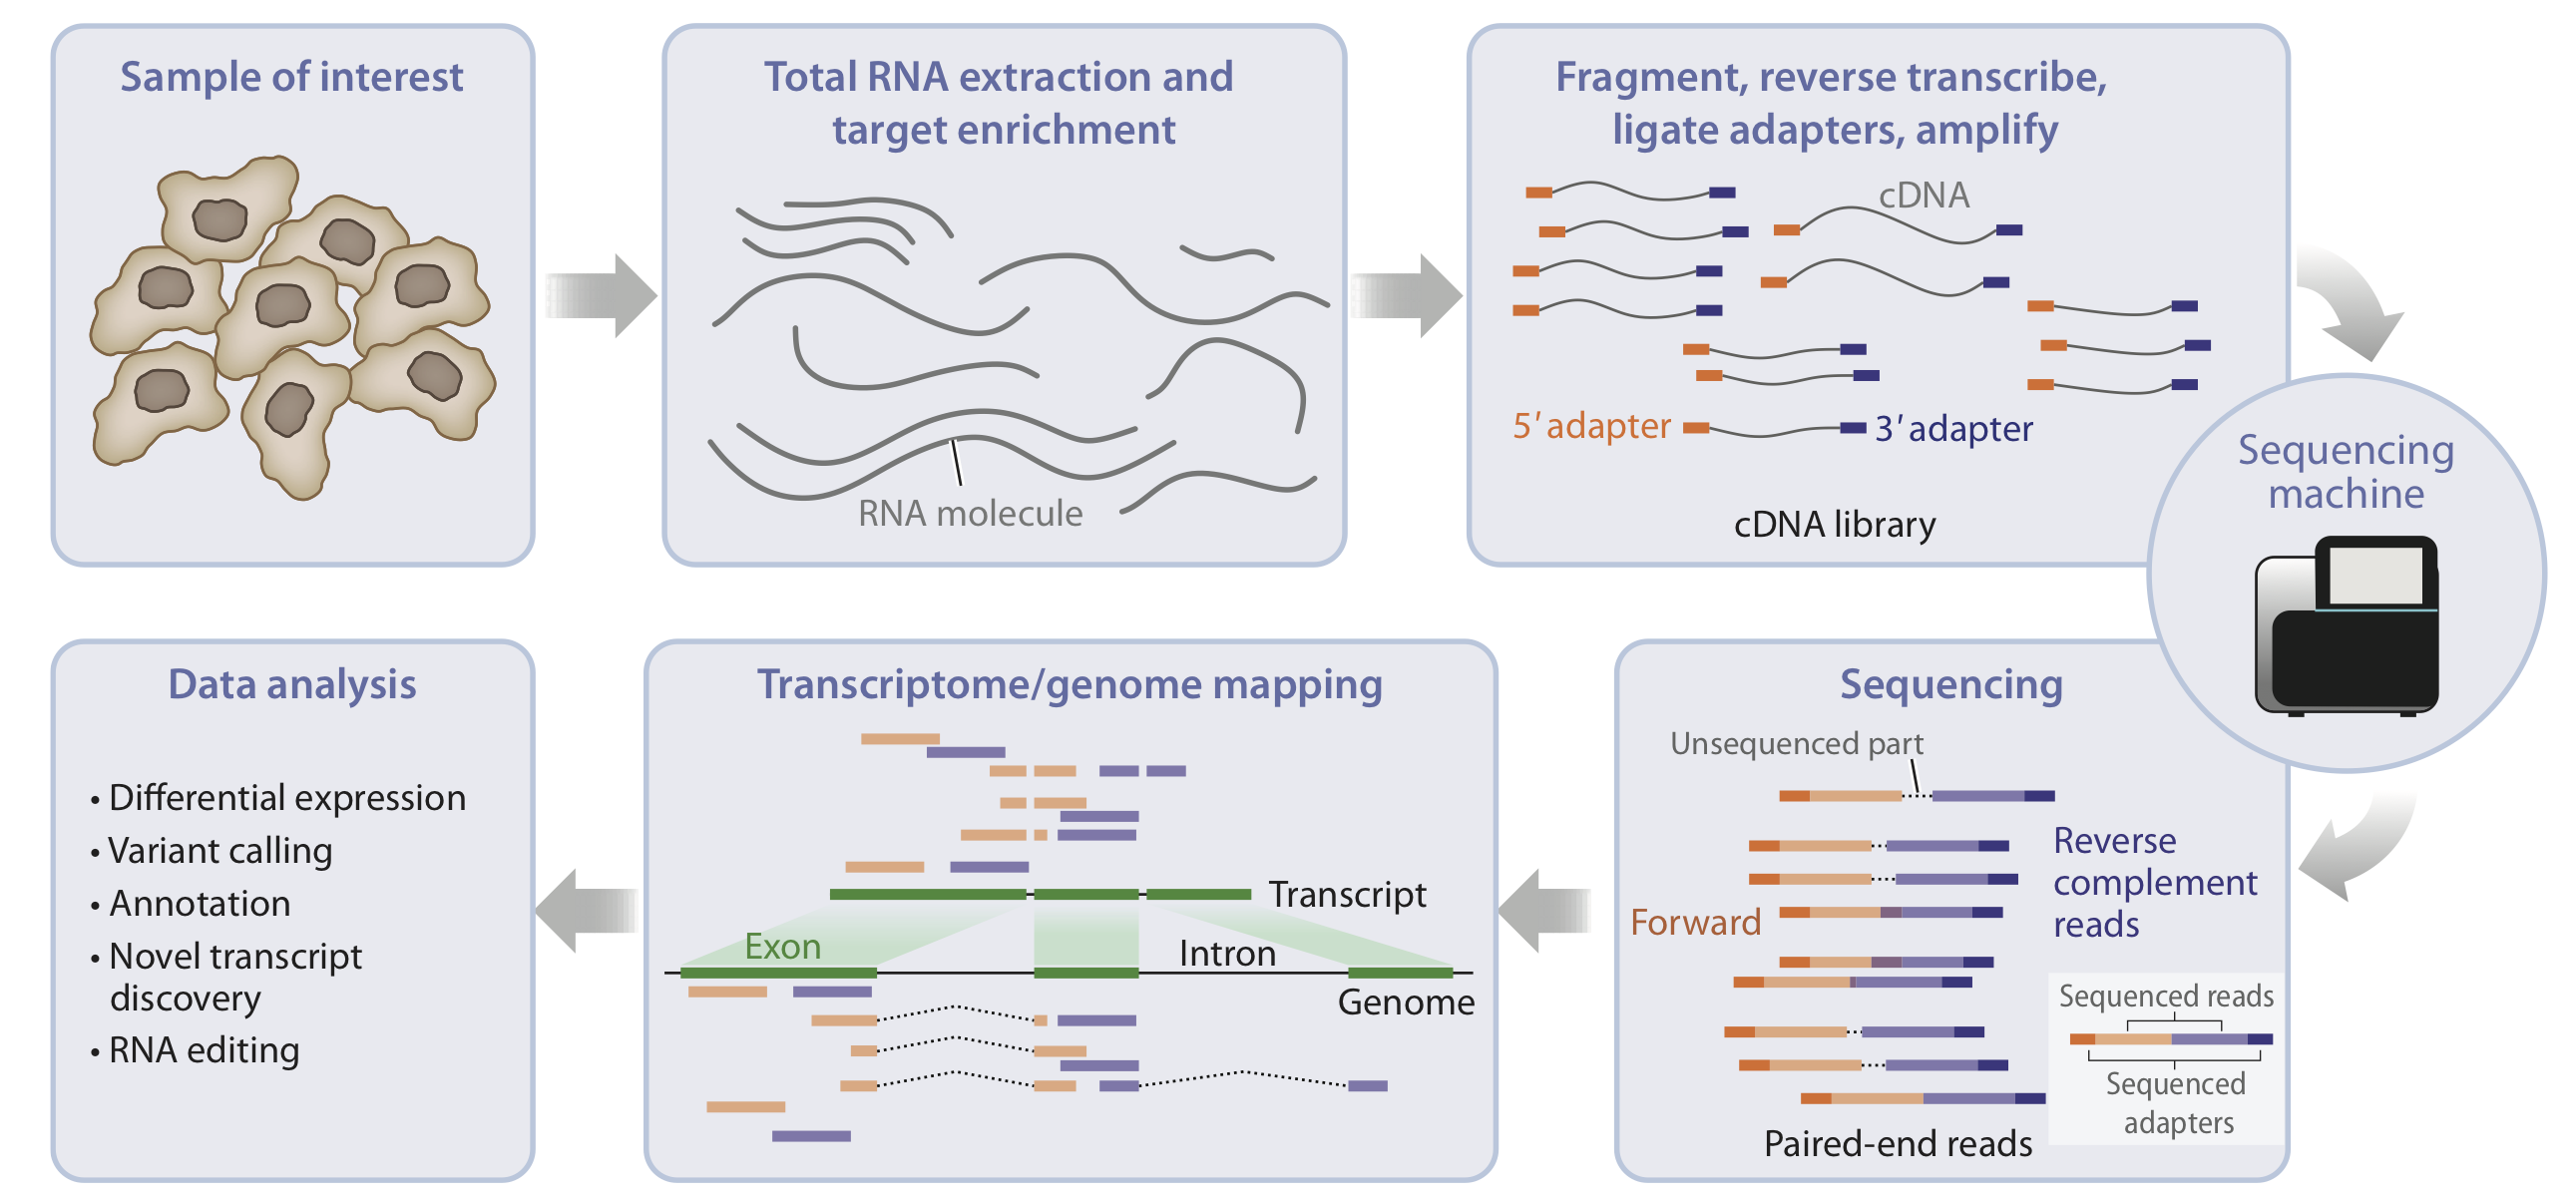 Figure: The sequencing workflow. Image adapted from Van den Berge et al. (2019).